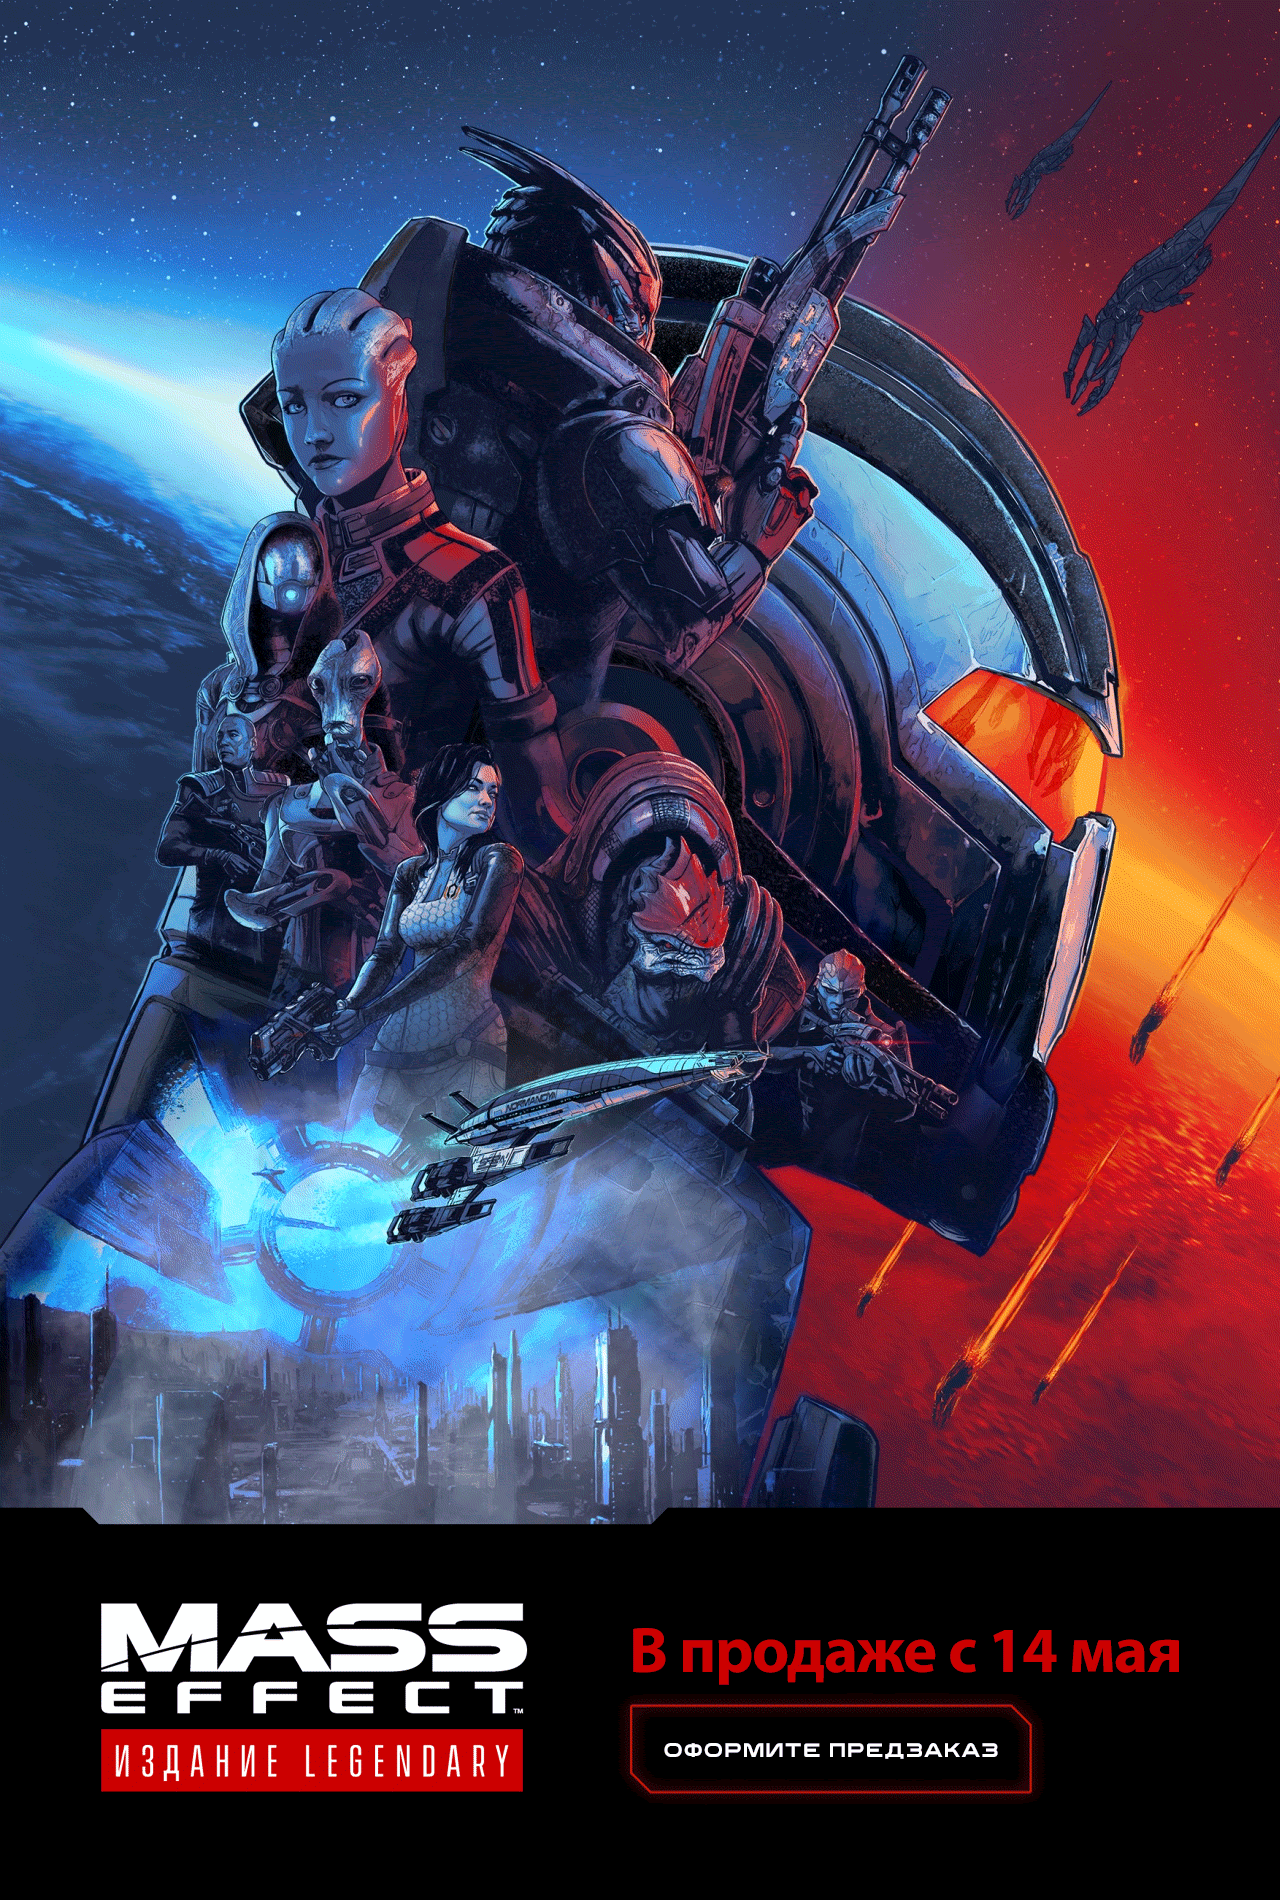 Mass Effect Legendary Edition preorder poster